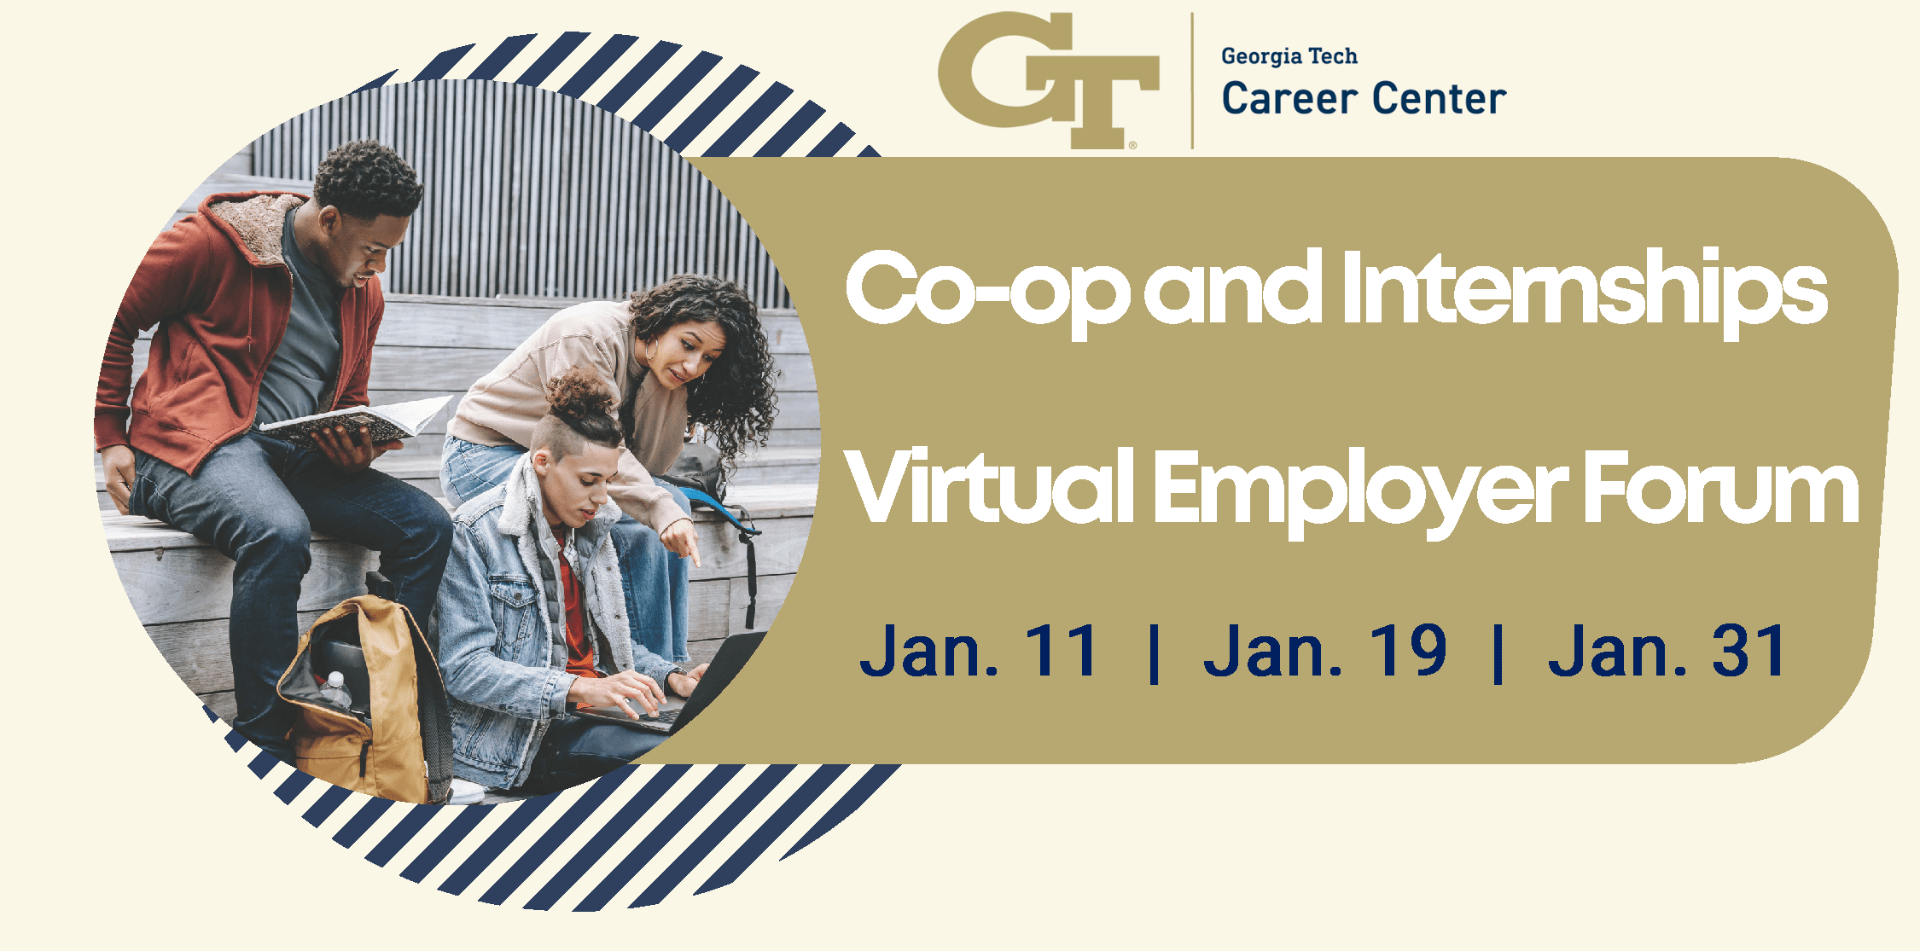 Co-op & Internship Virtual Employer Forum banner